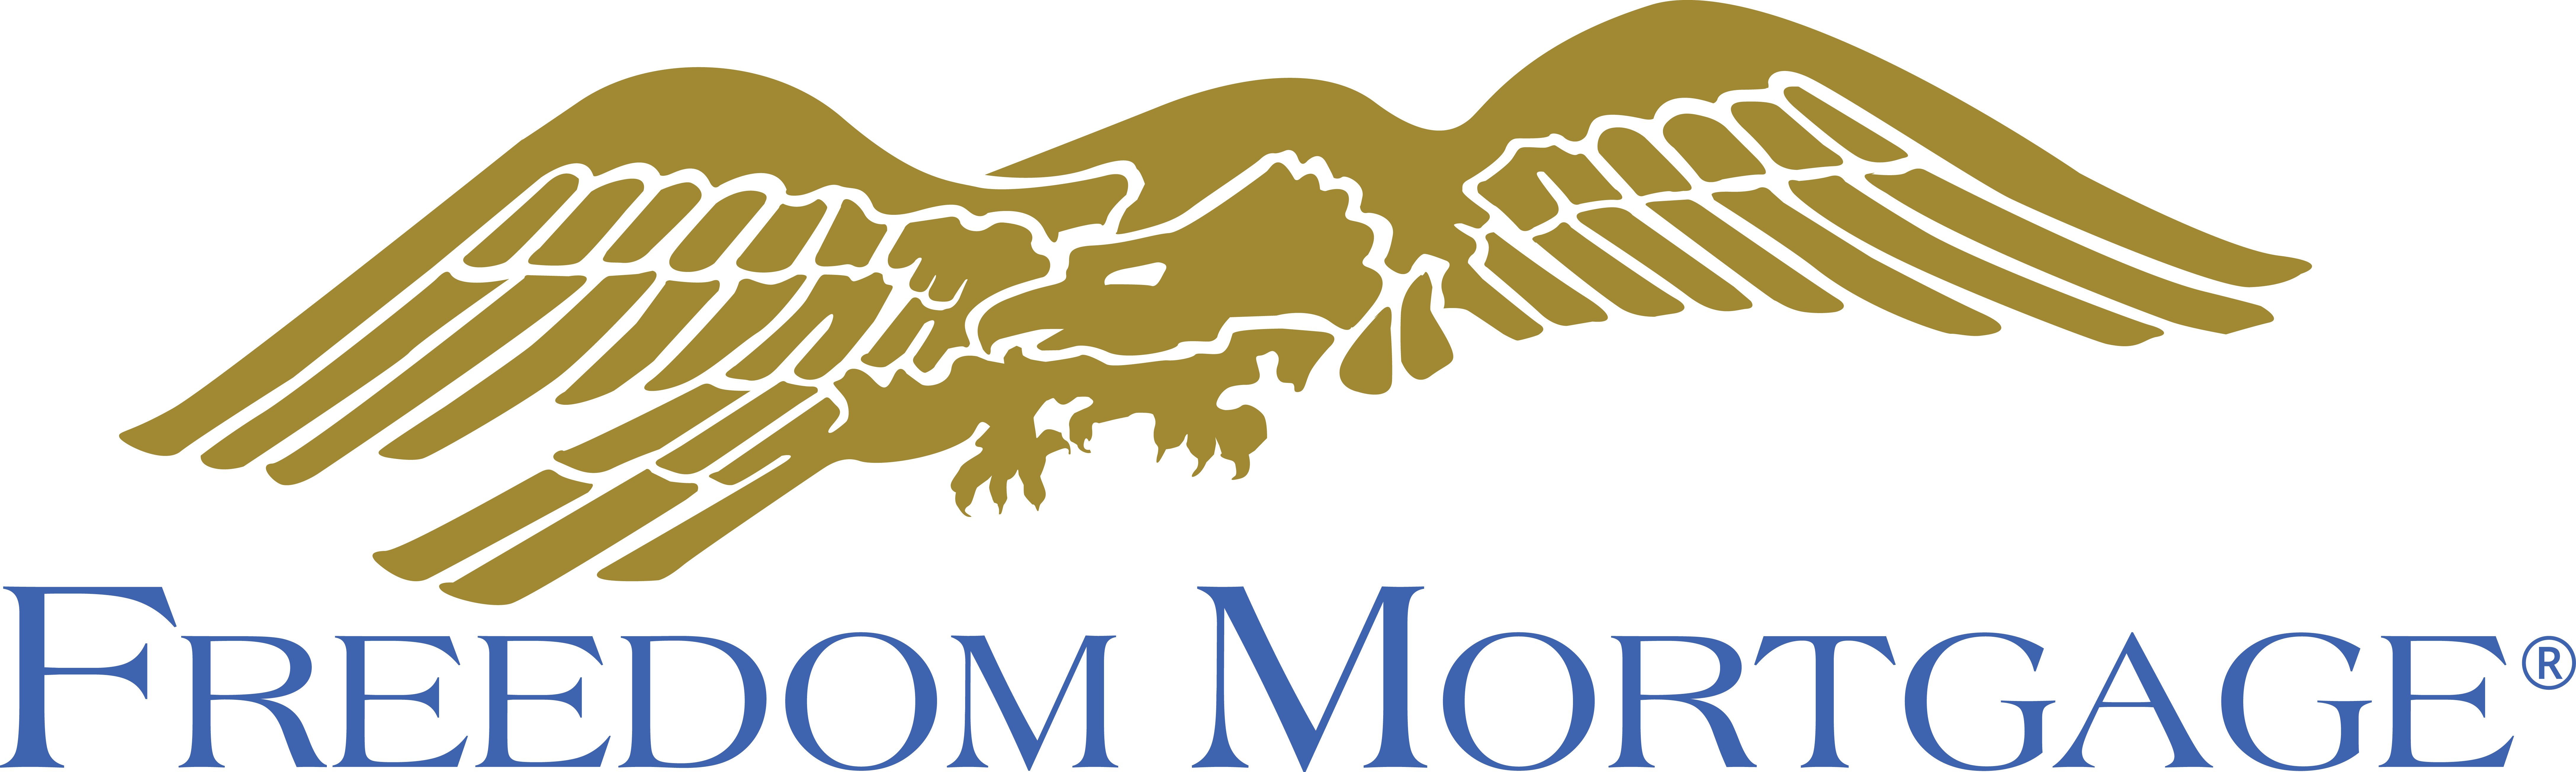 Freedom Mortgage logo